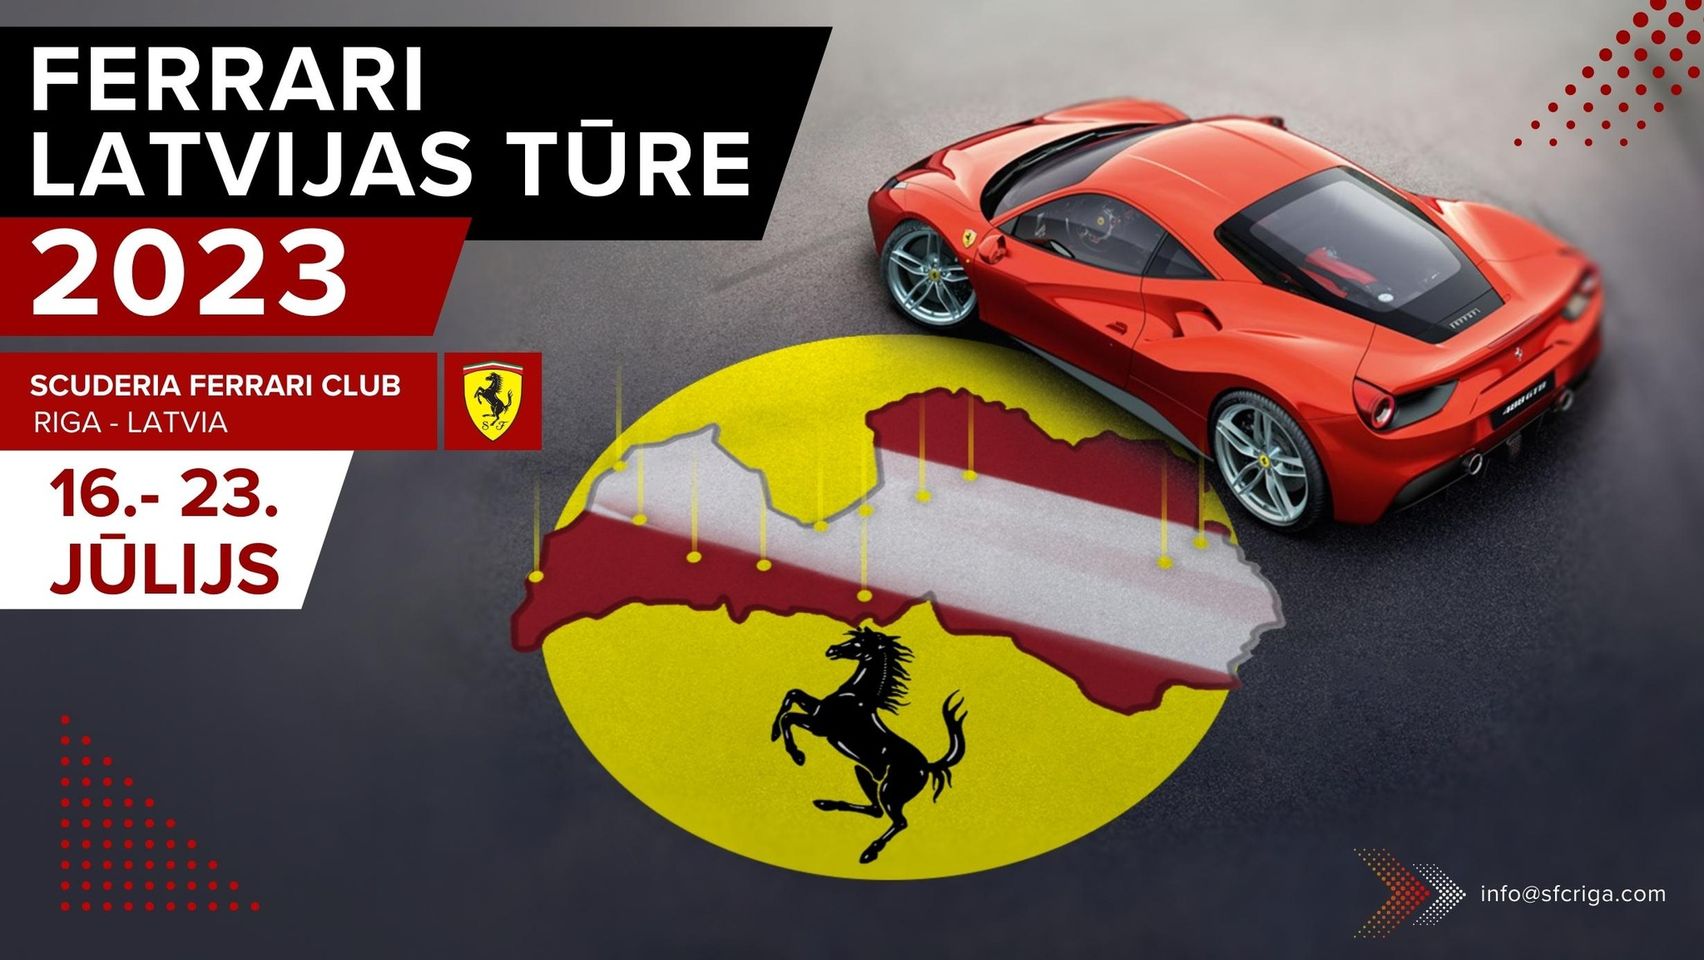 Poster of 2023 Latvian Ferrari Tour